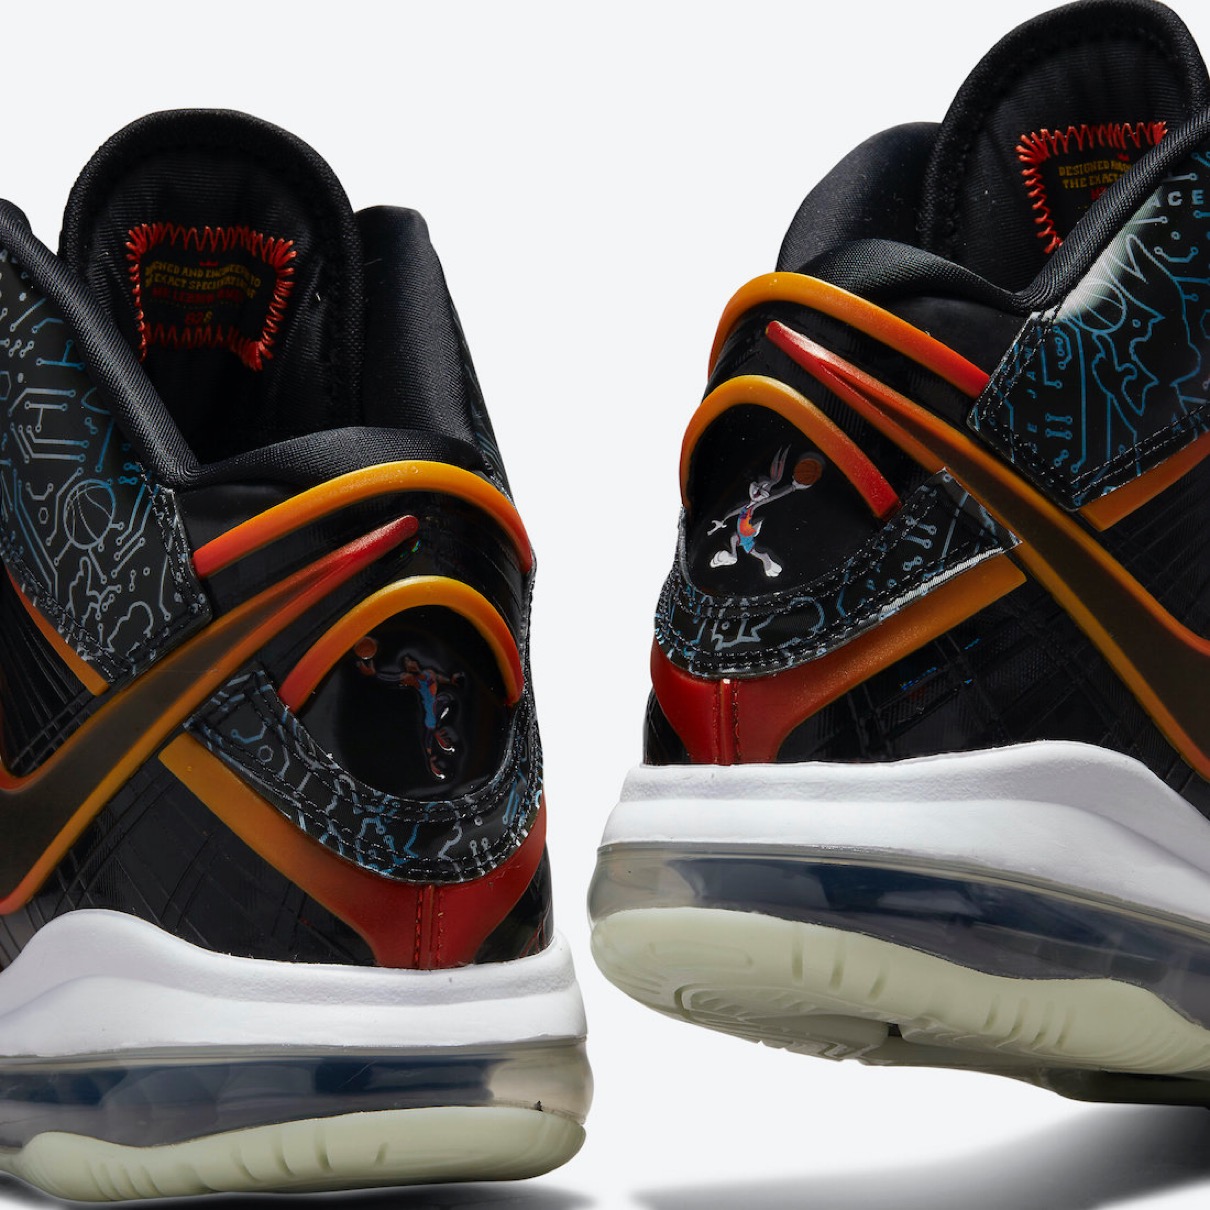 Nike】LeBron 8 QS “Space Jam”が国内8月23日に発売予定 | UP TO DATE